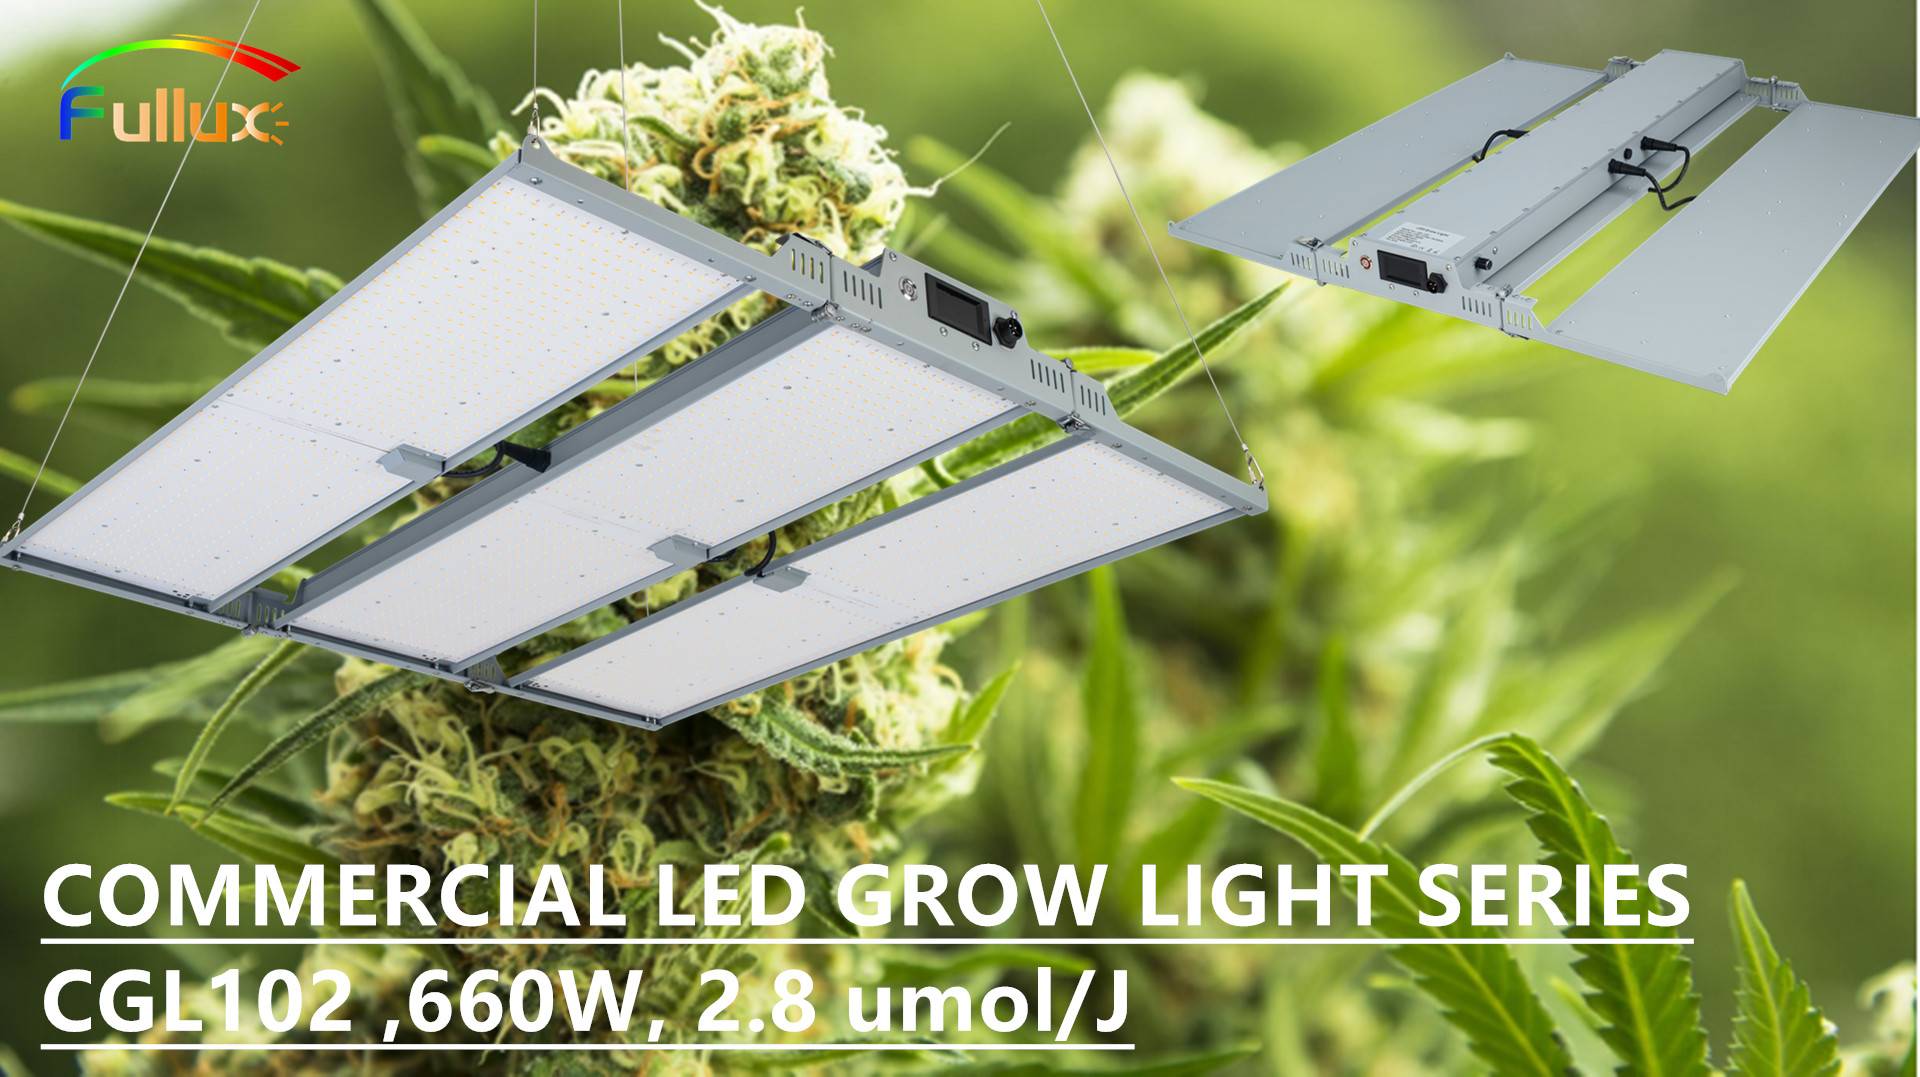 CGL102 foldable led grow light